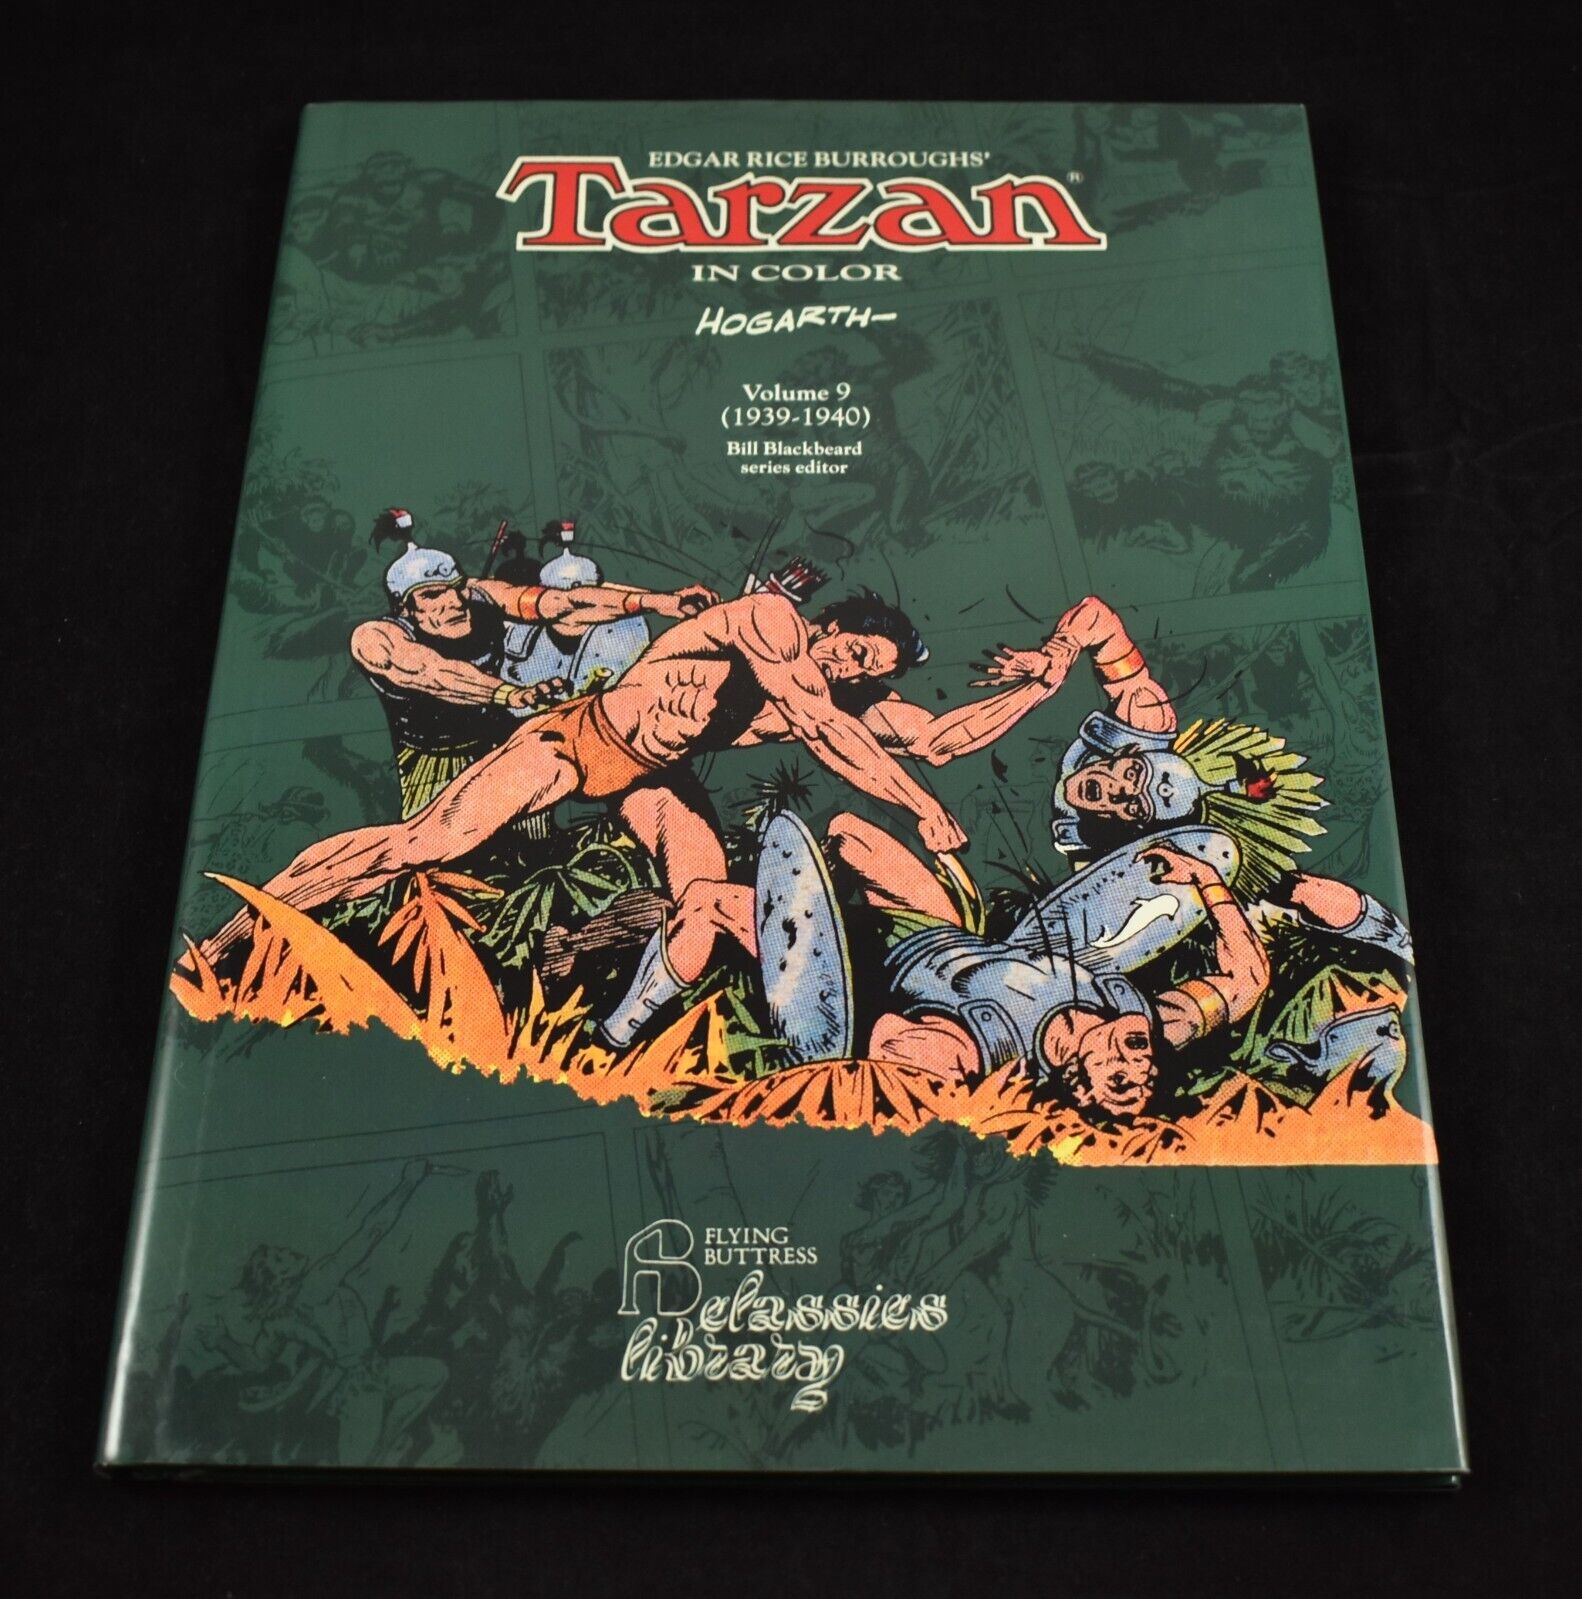 Tarzan in Color Volume 9 (1939-1940) E. R. Burroughs Hardcover NBM 1994